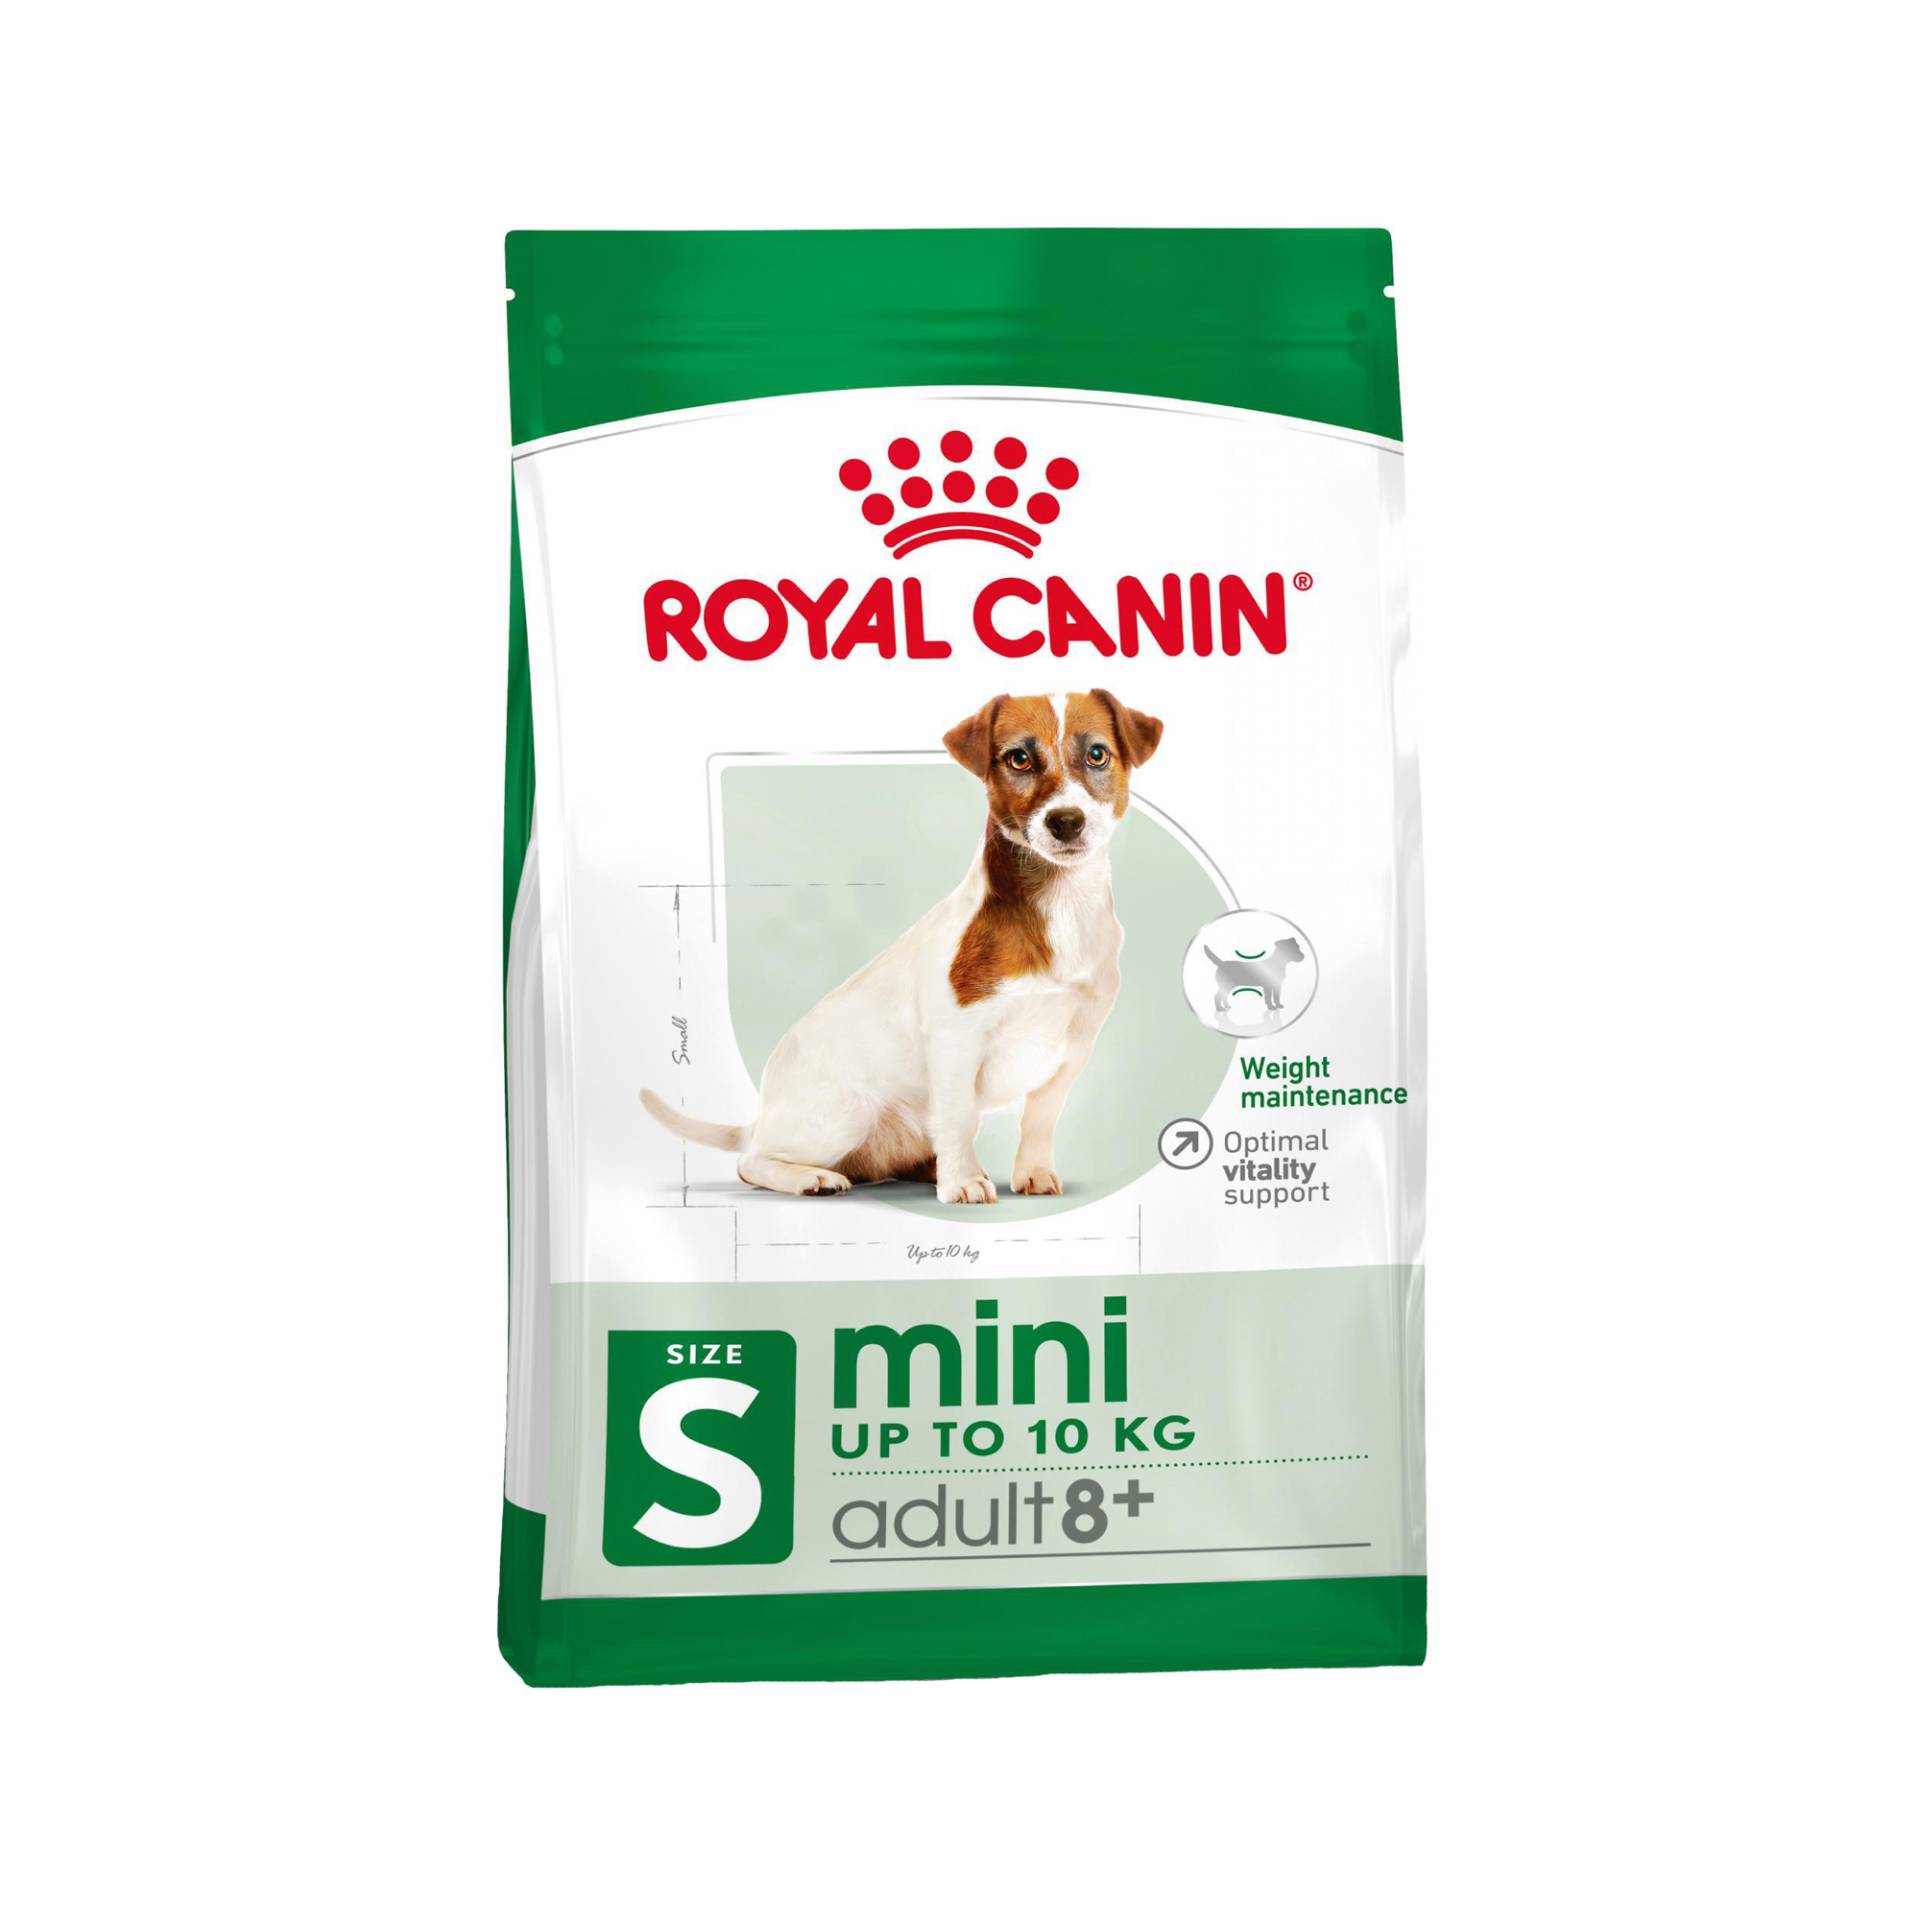 Royal Canin Mini Adult 8+ - 2 kg von Royal Canin